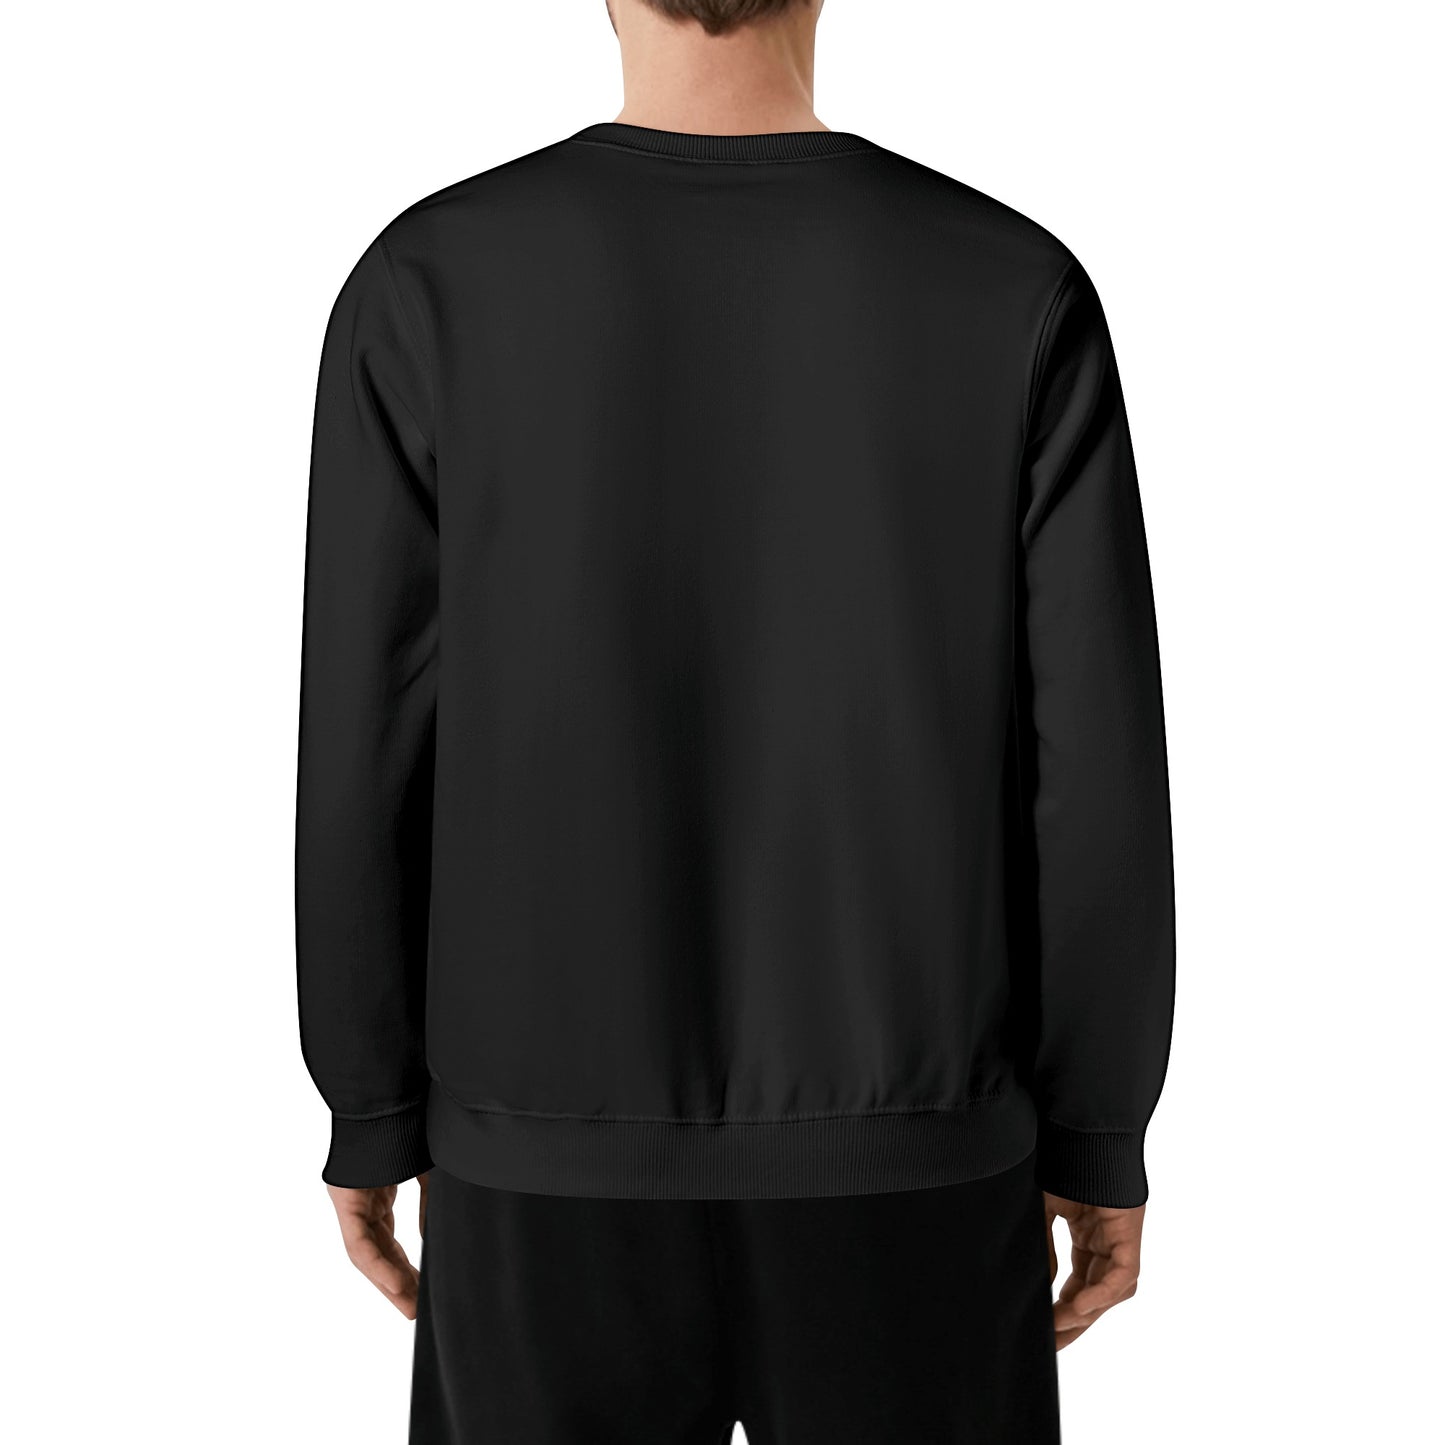 FIGARO Adult Cotton Sweatershirt